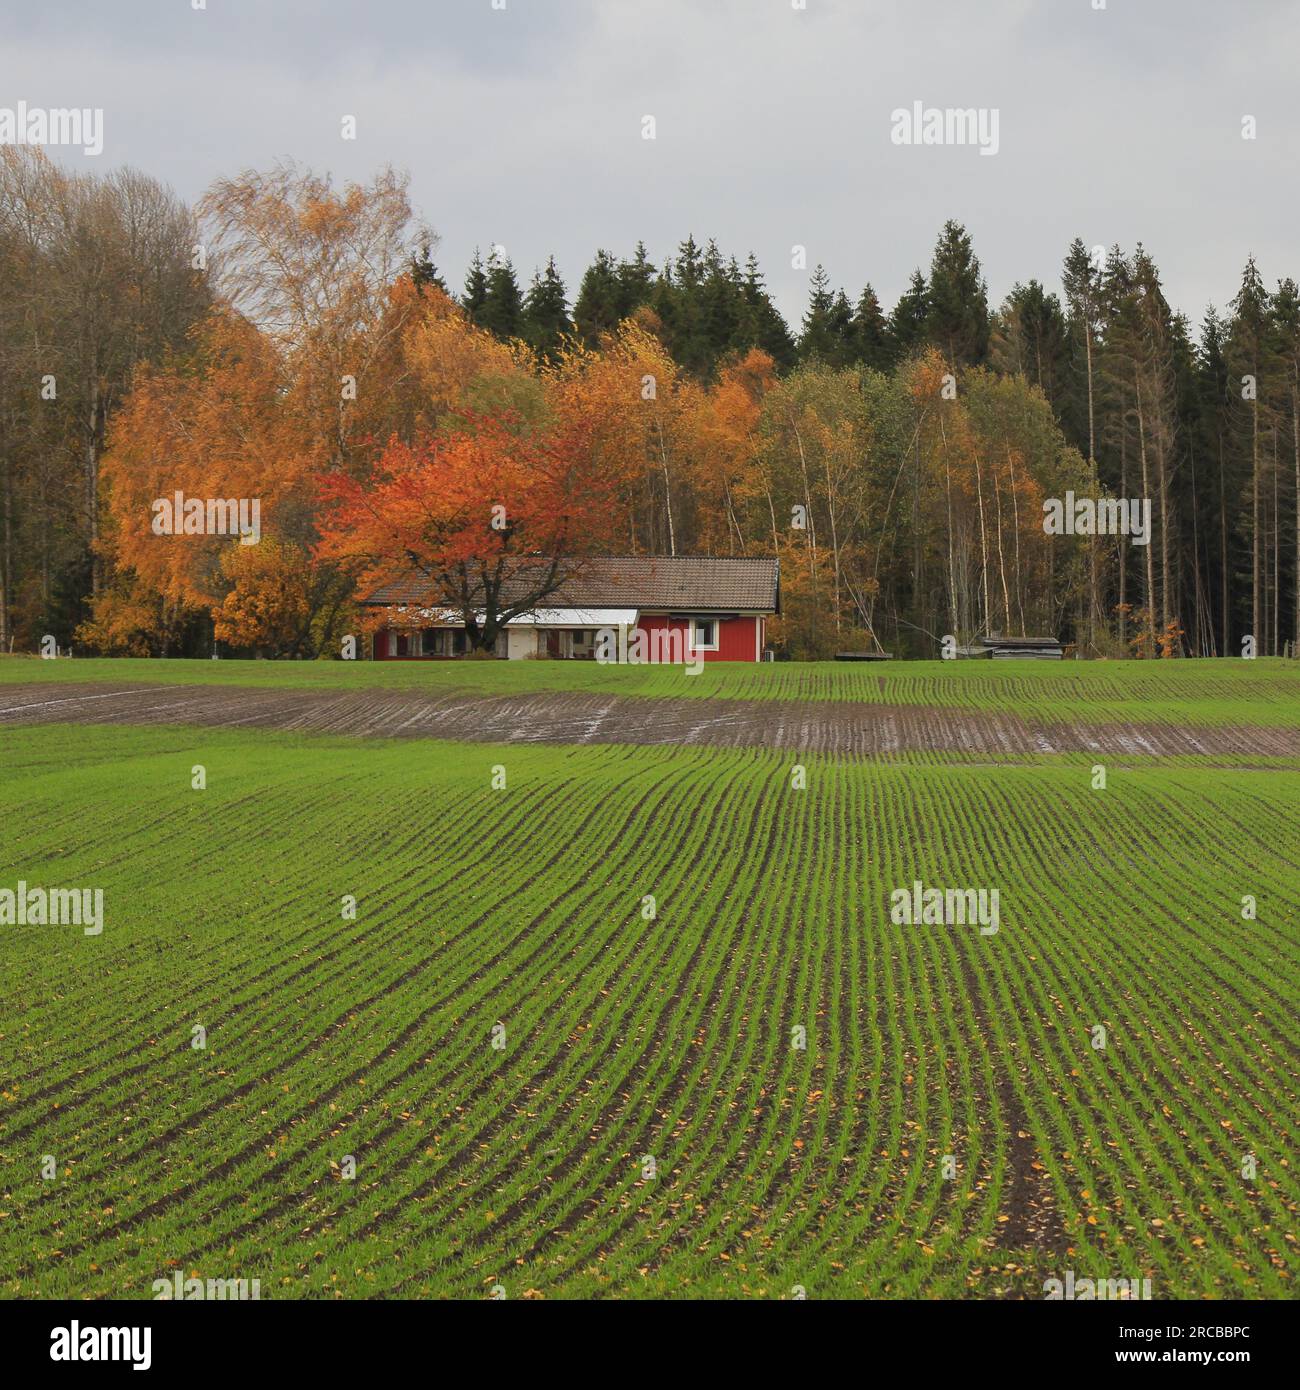 Rural October scene in Mellerud, Sweden Stock Photo